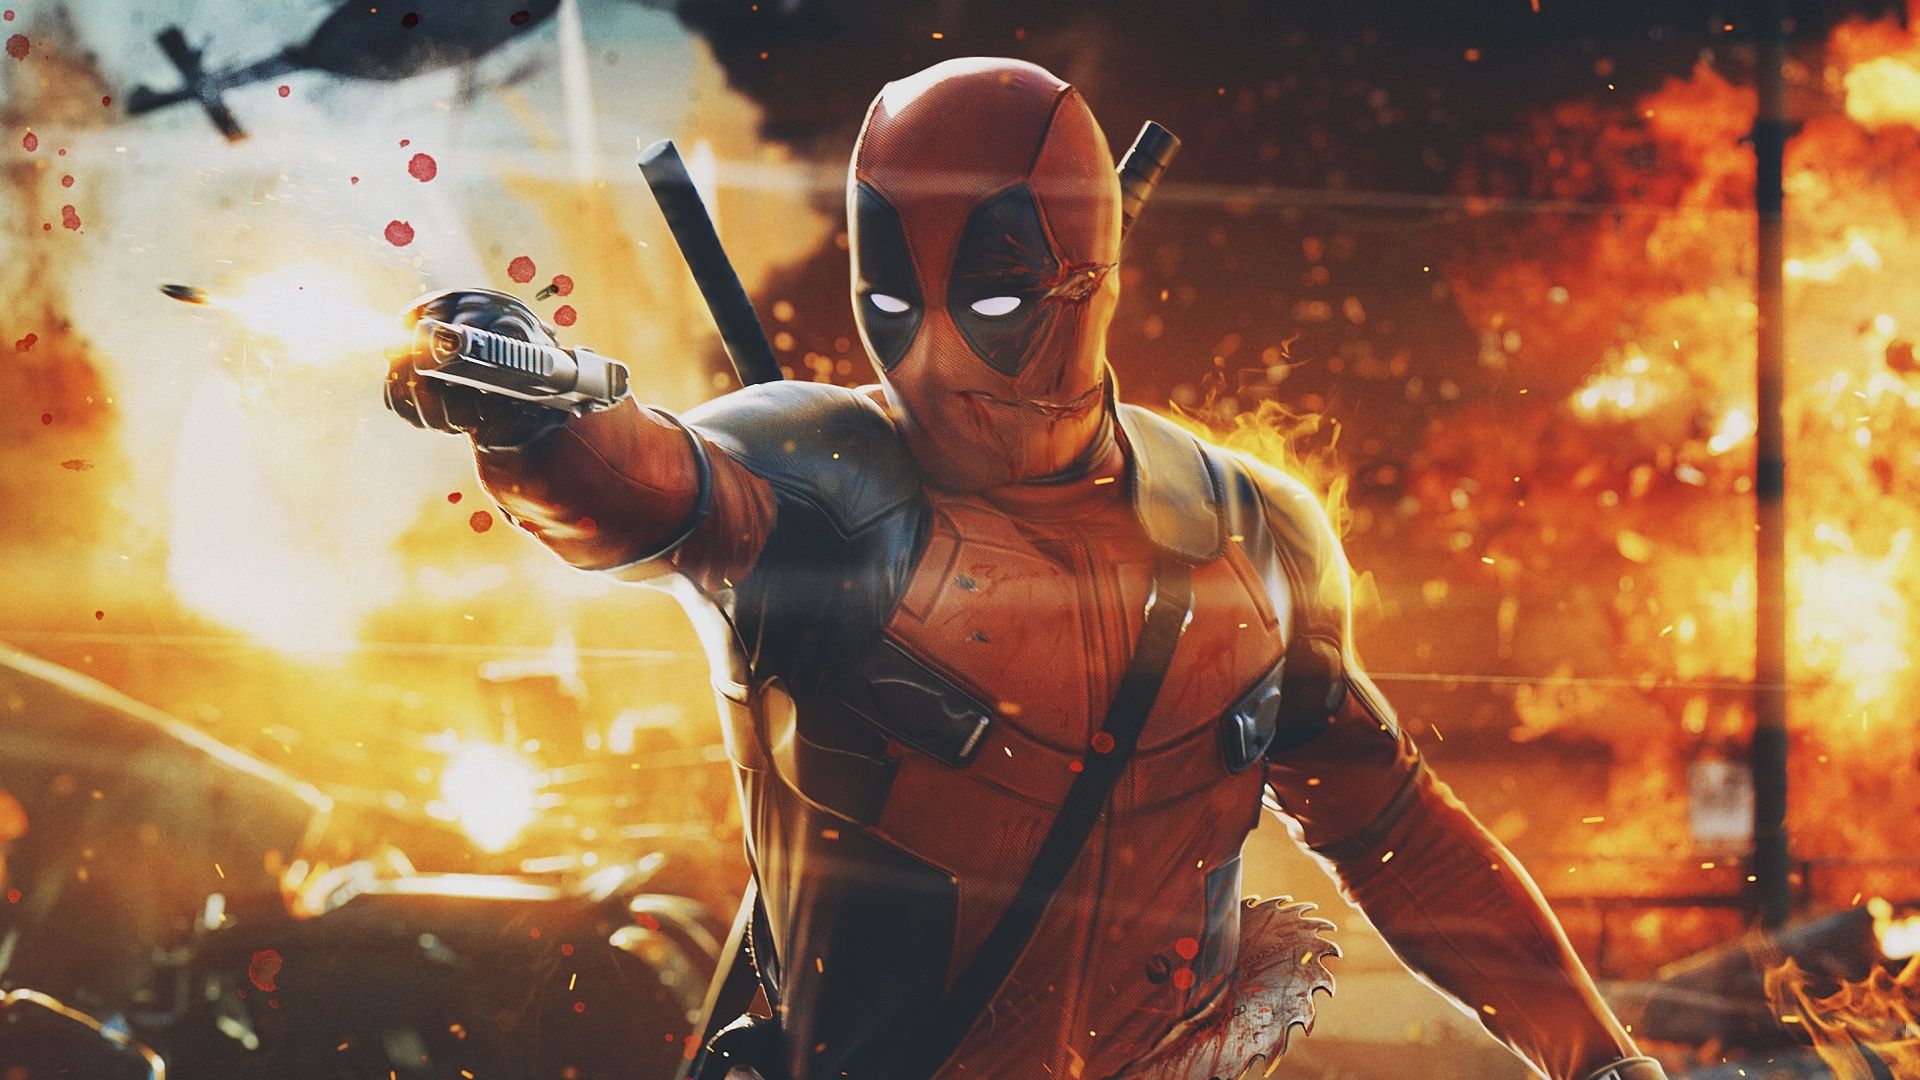 Deadpool, gun fire, superhero, marvel studio, movie, poster wallpaper, HD image, picture, background, 164370